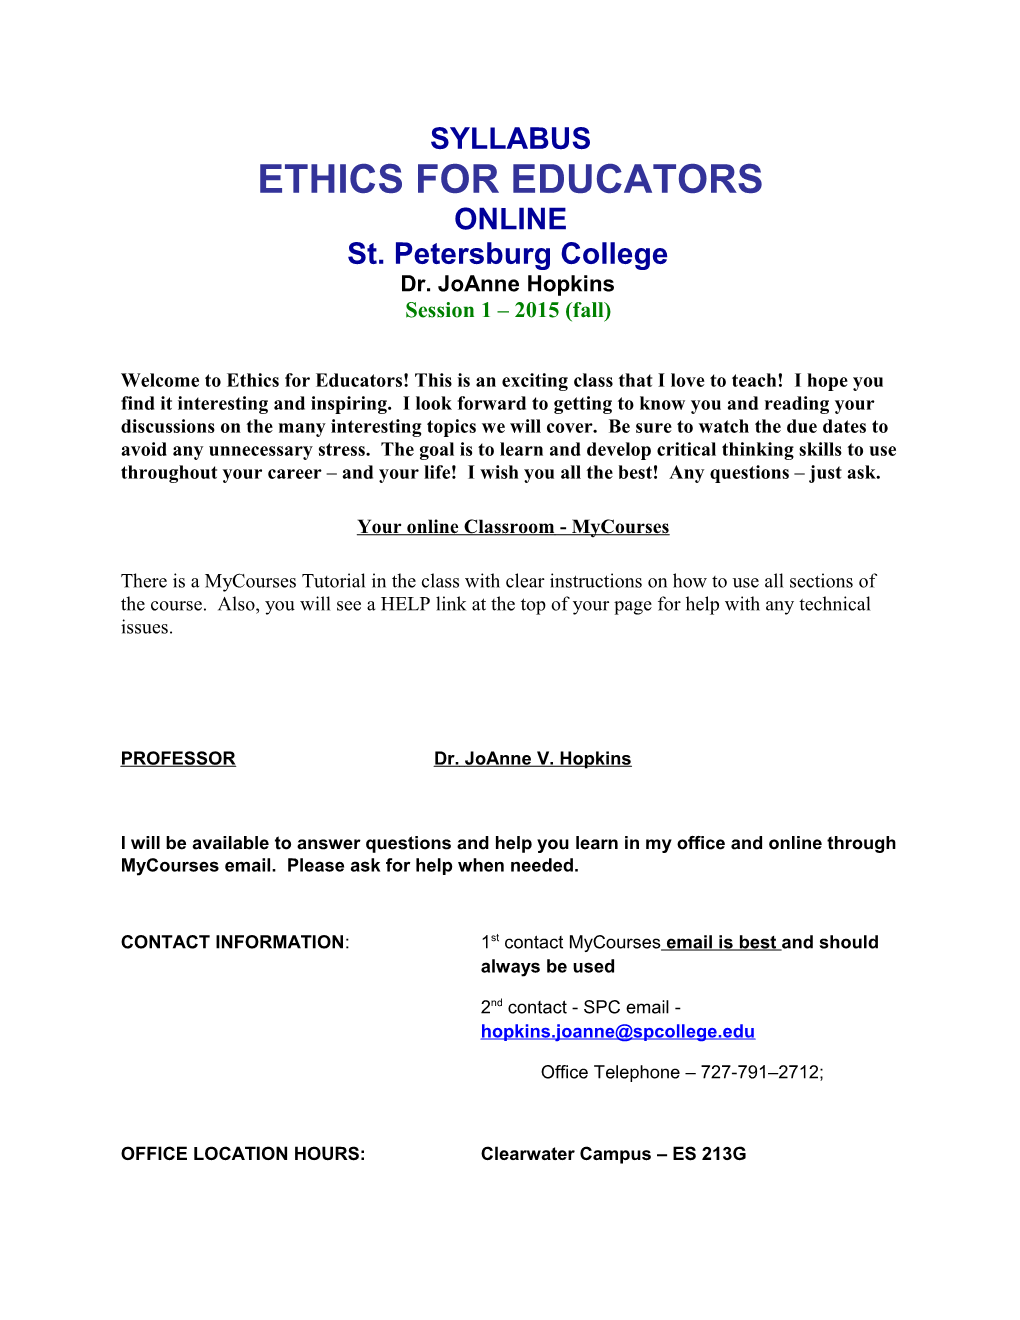 Ethics for Educators